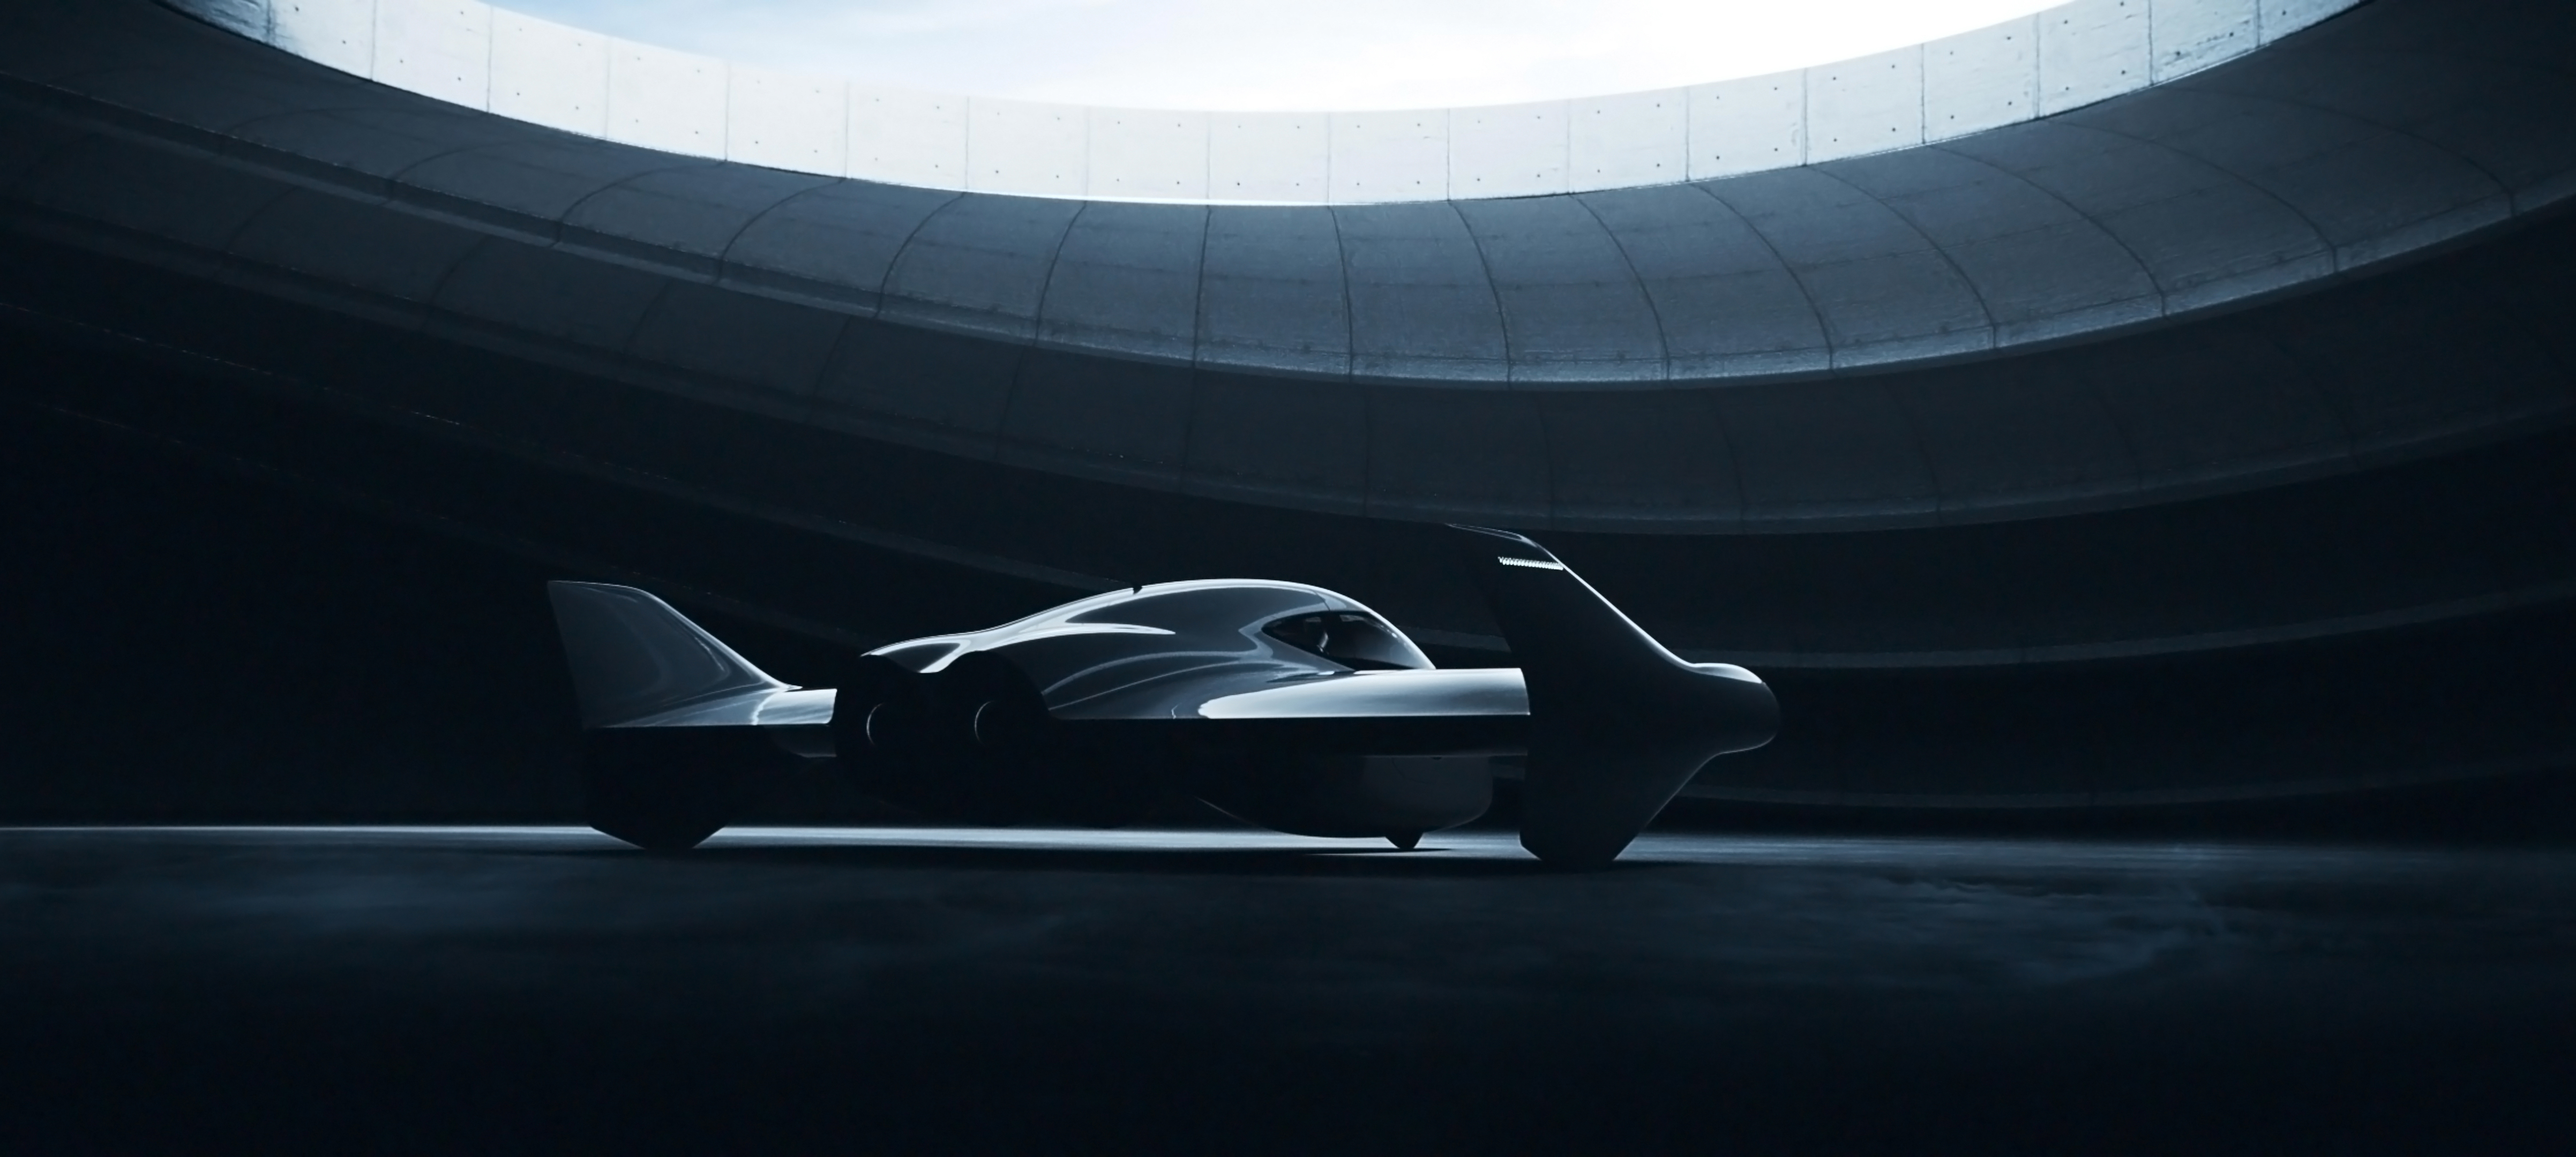 Boeing, Porsche and Aurora Flight Sciences electric air vehicle concept, 2019, PCNA